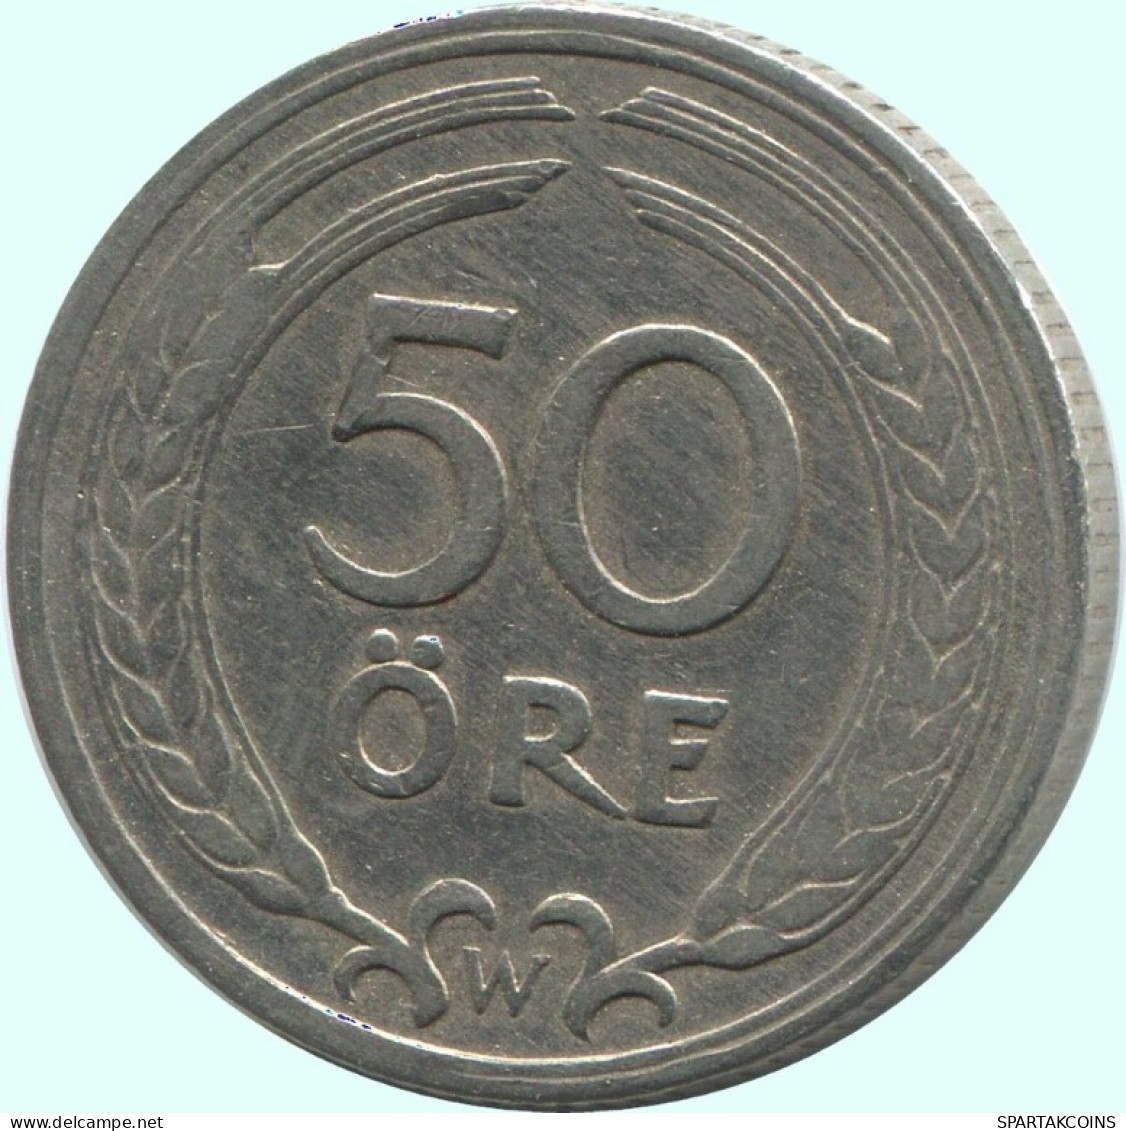 50 ORE 1921 W SUECIA SWEDEN Moneda RARE #AC698.2.E.A - Sweden